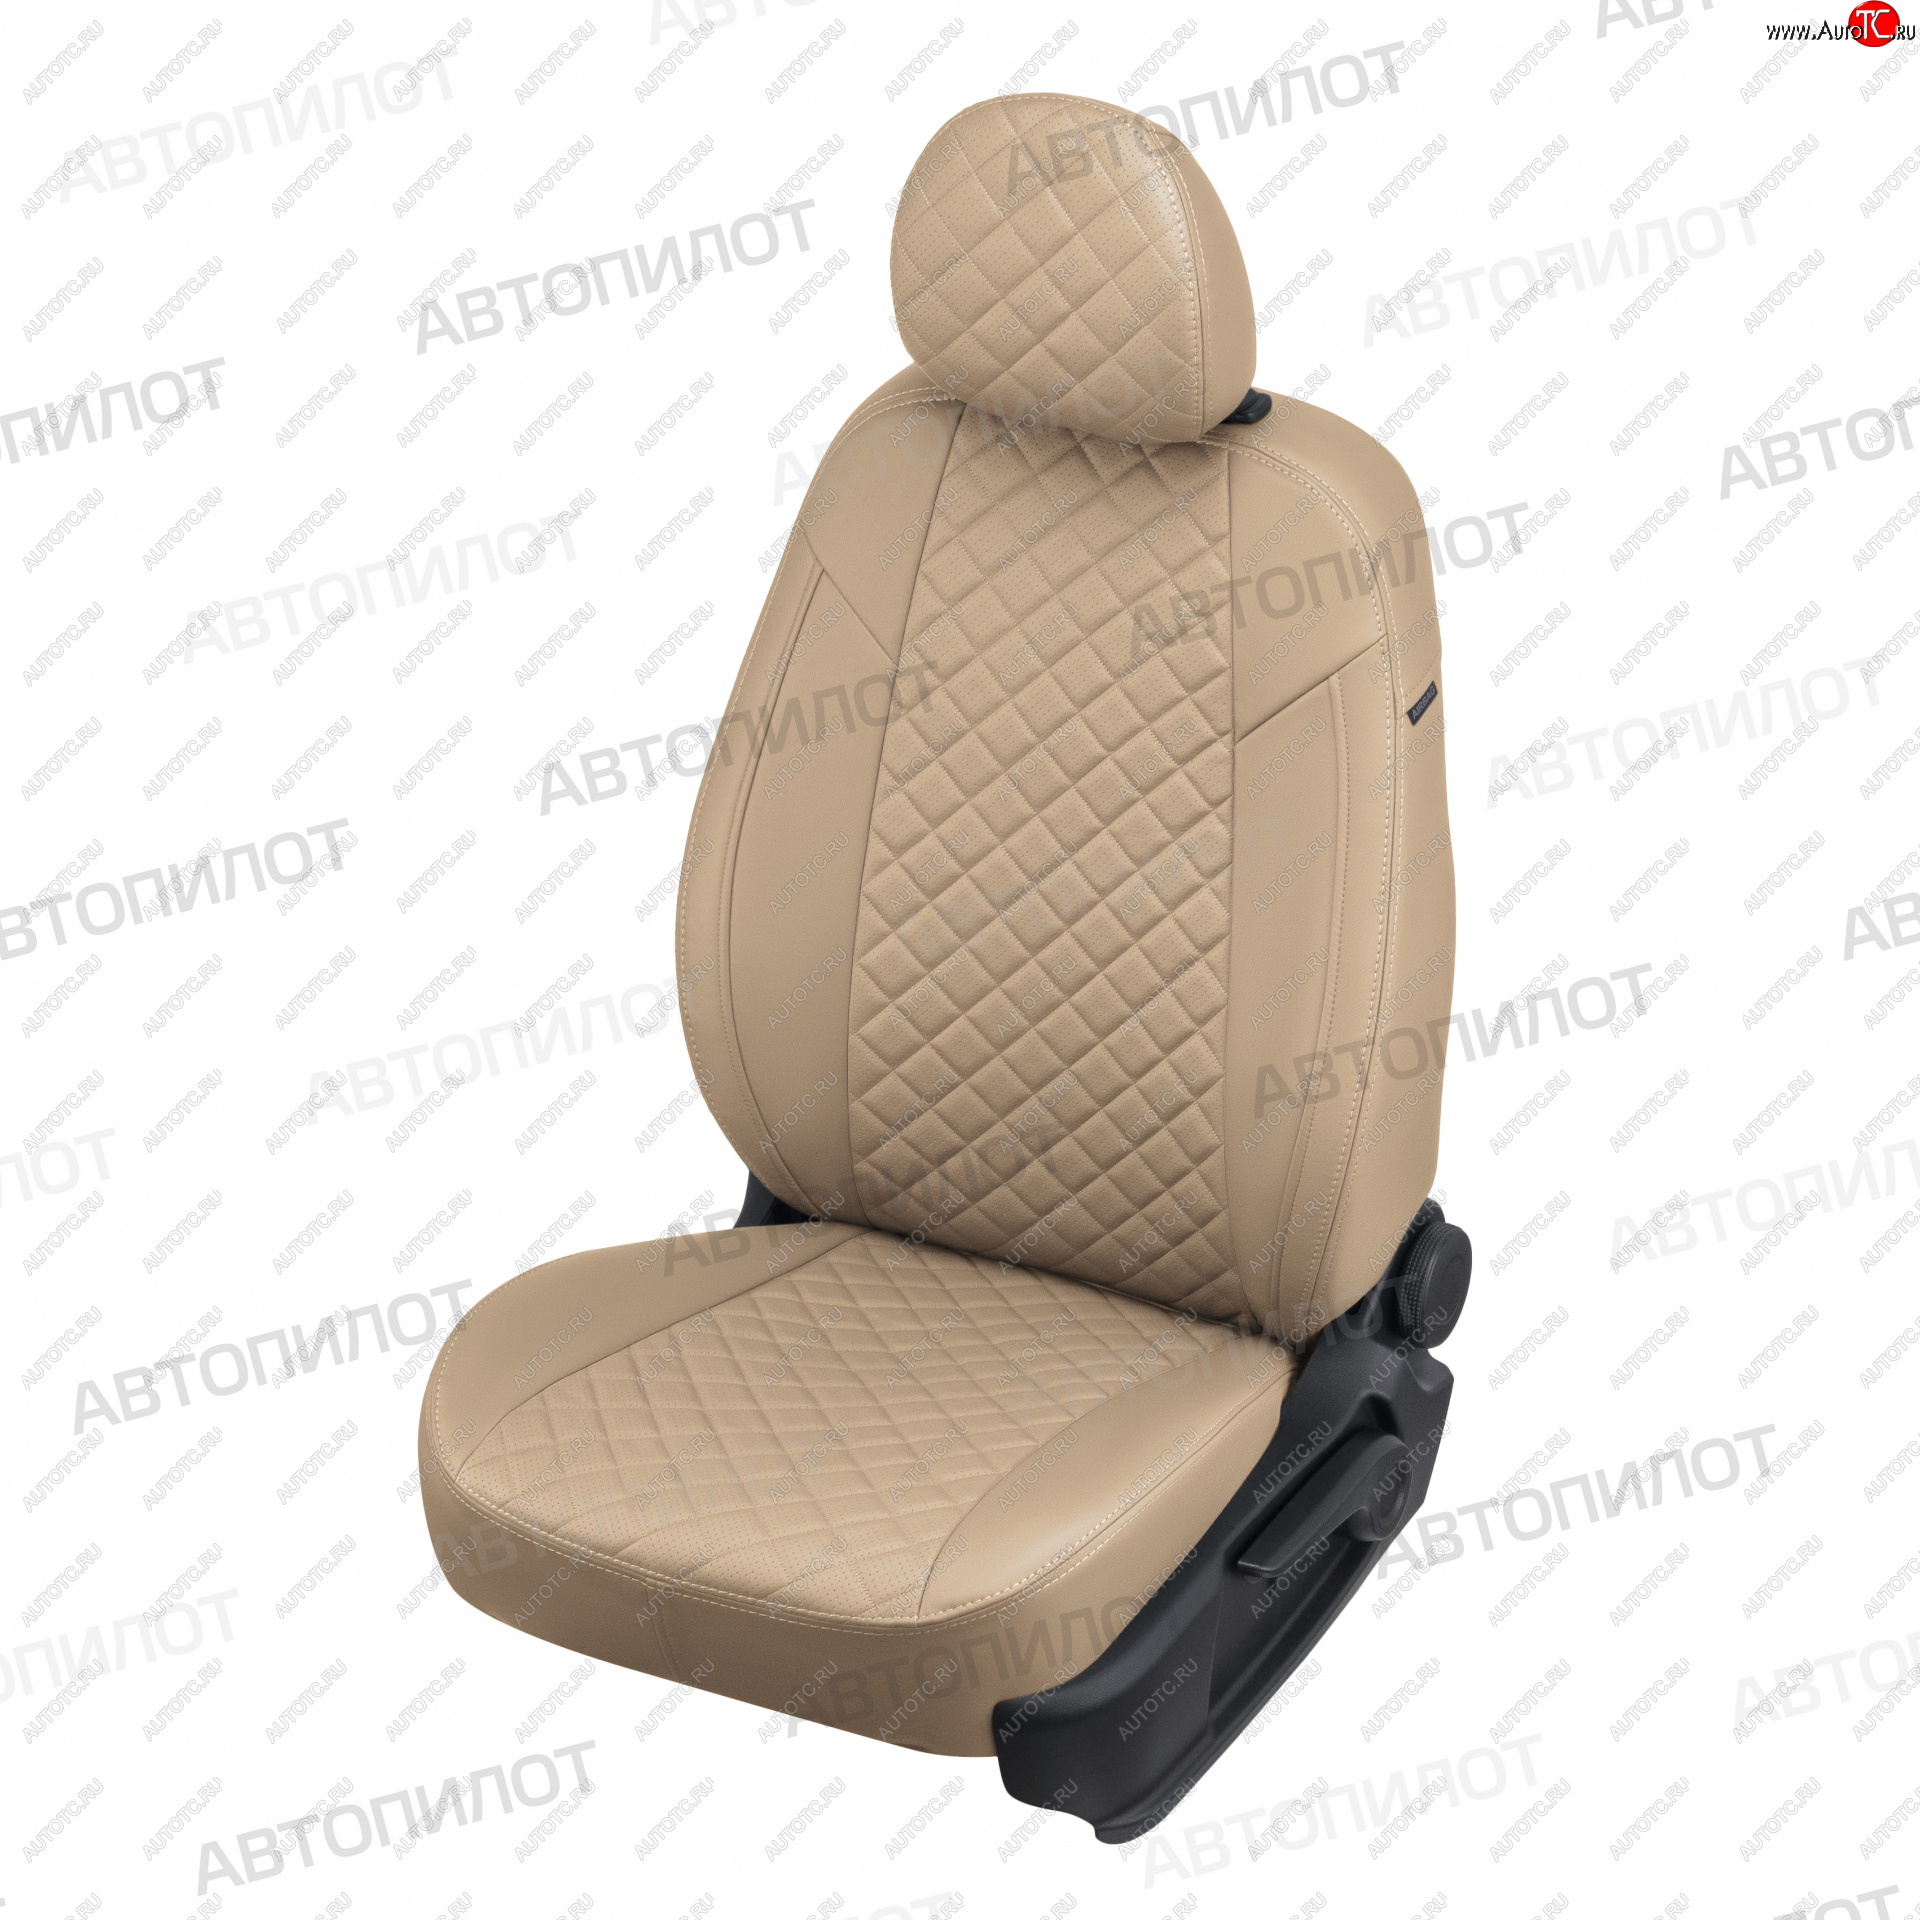 13 999 р. Чехлы сидений (экокожа) Автопилот Ромб  Fiat Bravo  198 (2007-2015) (темно-бежевый)